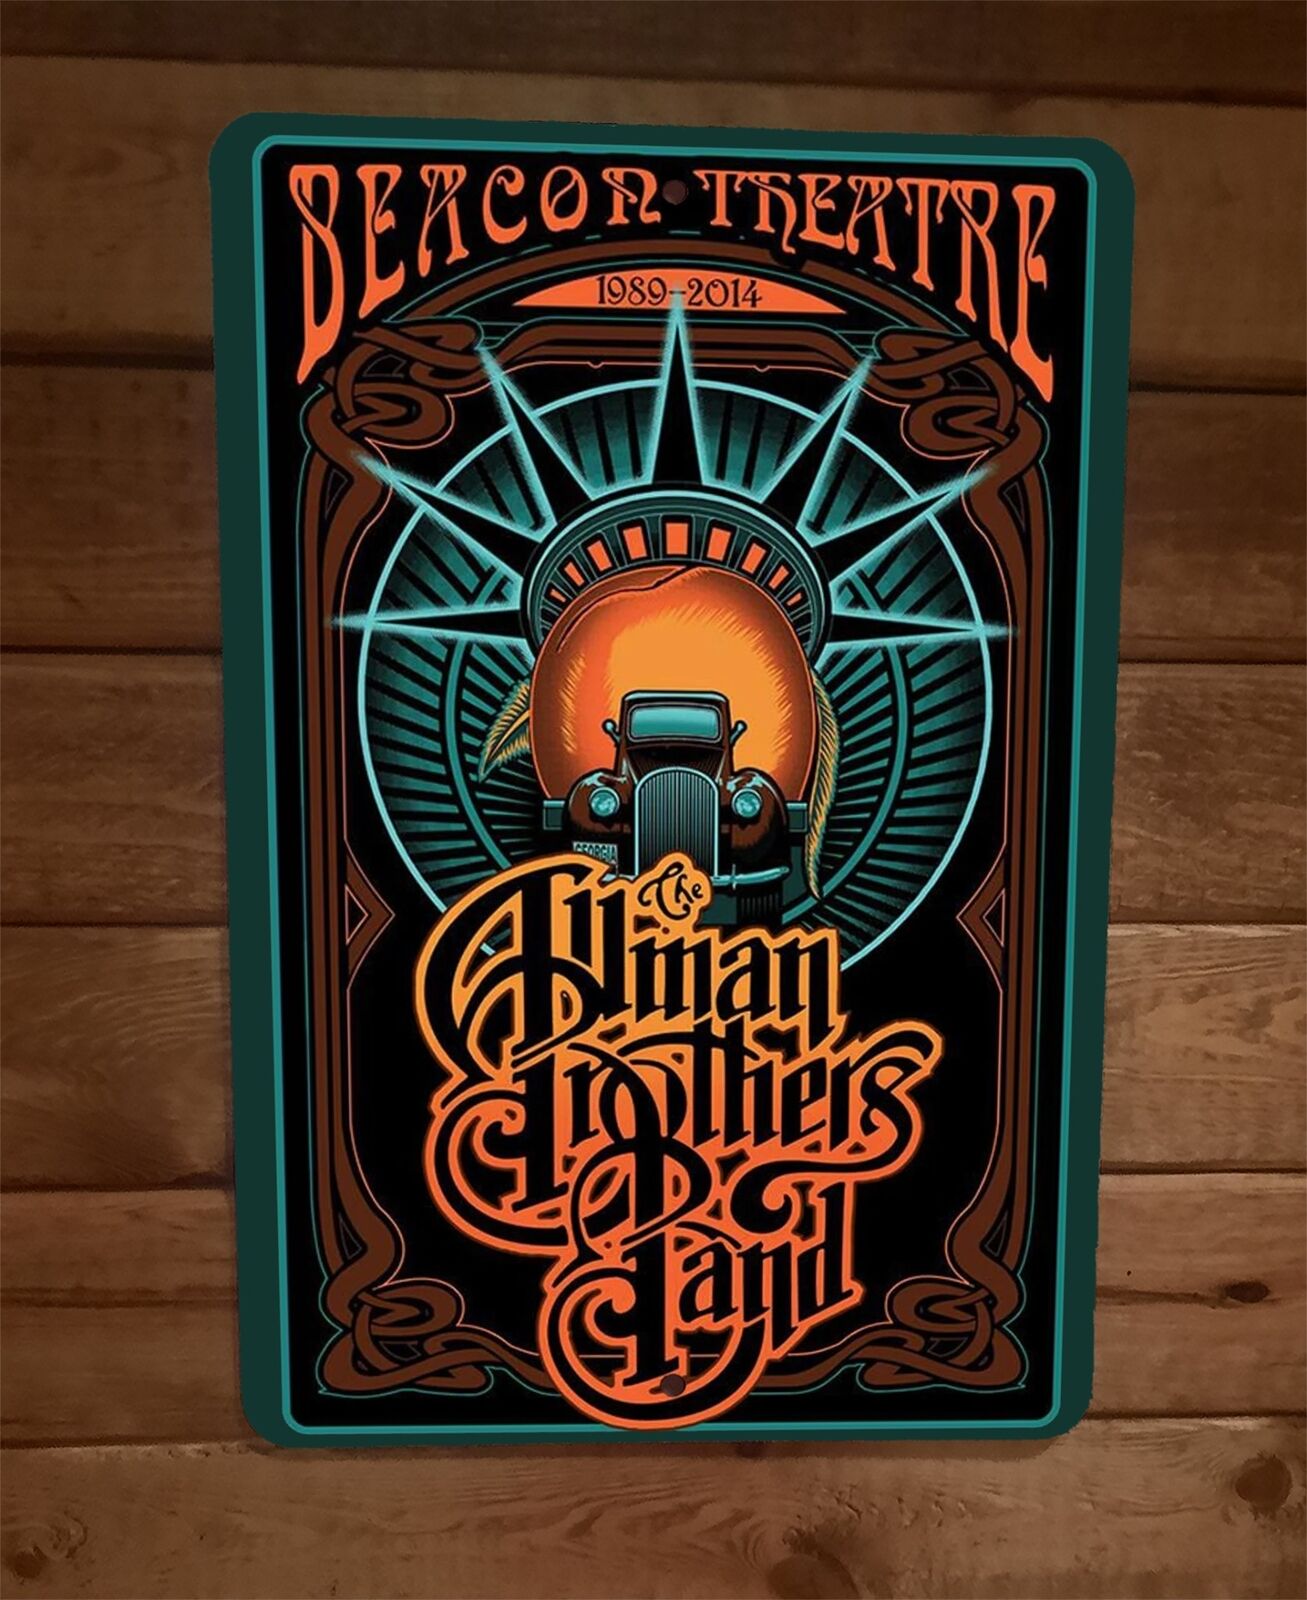 Alman Brothers Band Beaton Theater 8x12 Metal Wall Sign